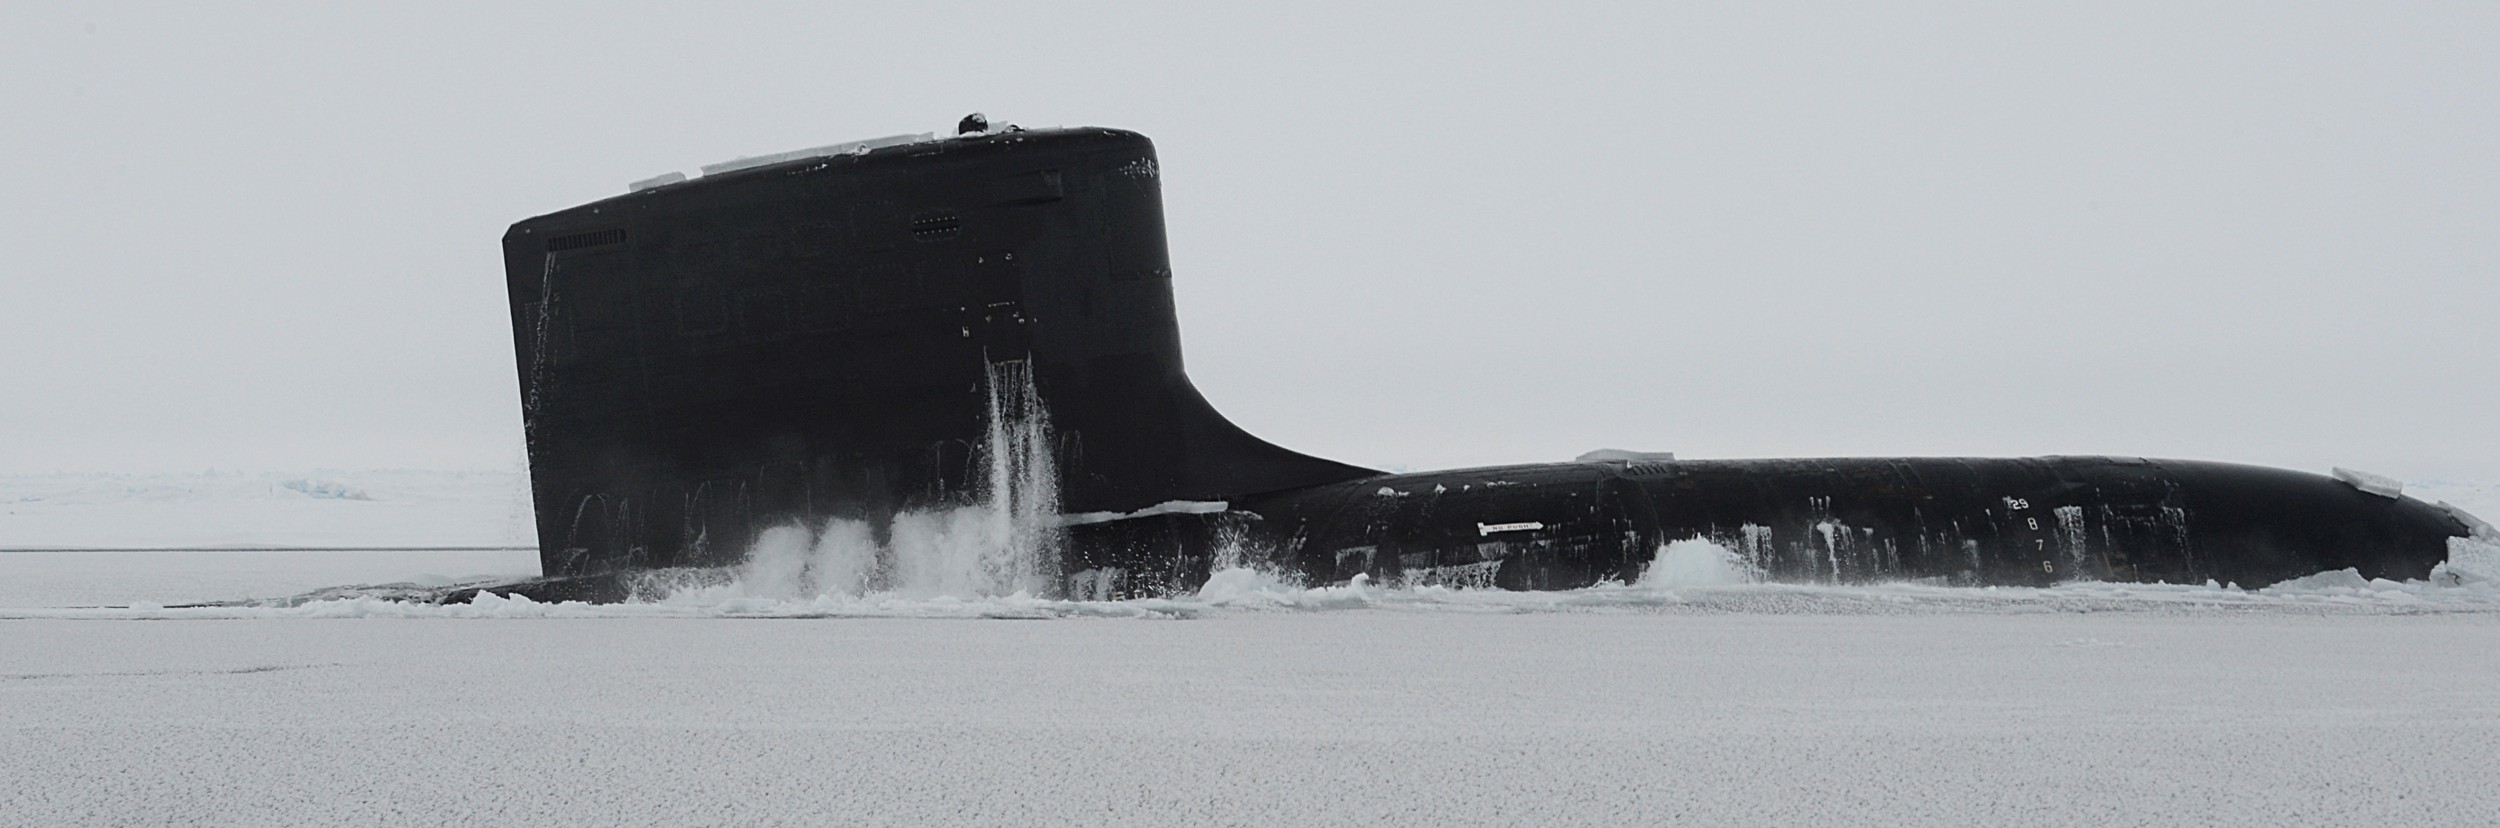 ssn-779 uss new mexico virginia class attack submarine us navy 2014 02 ice exercise icex arctic ocean